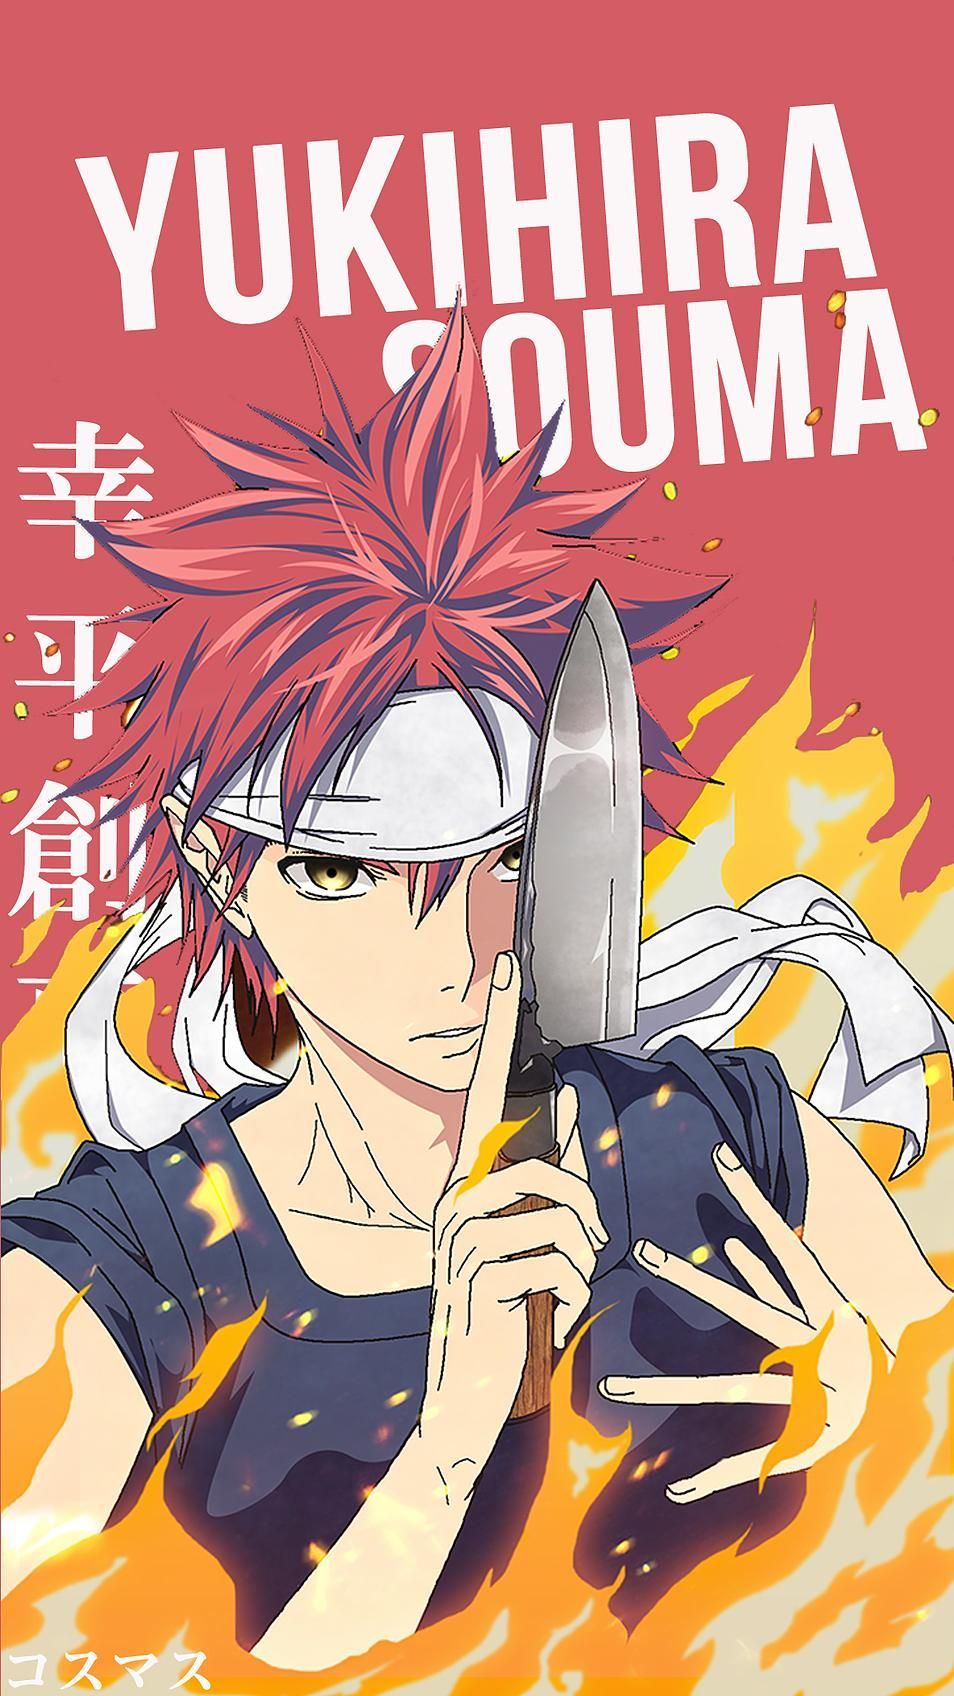 Yukihira Souma. Anime shows, Anime, Anime character names